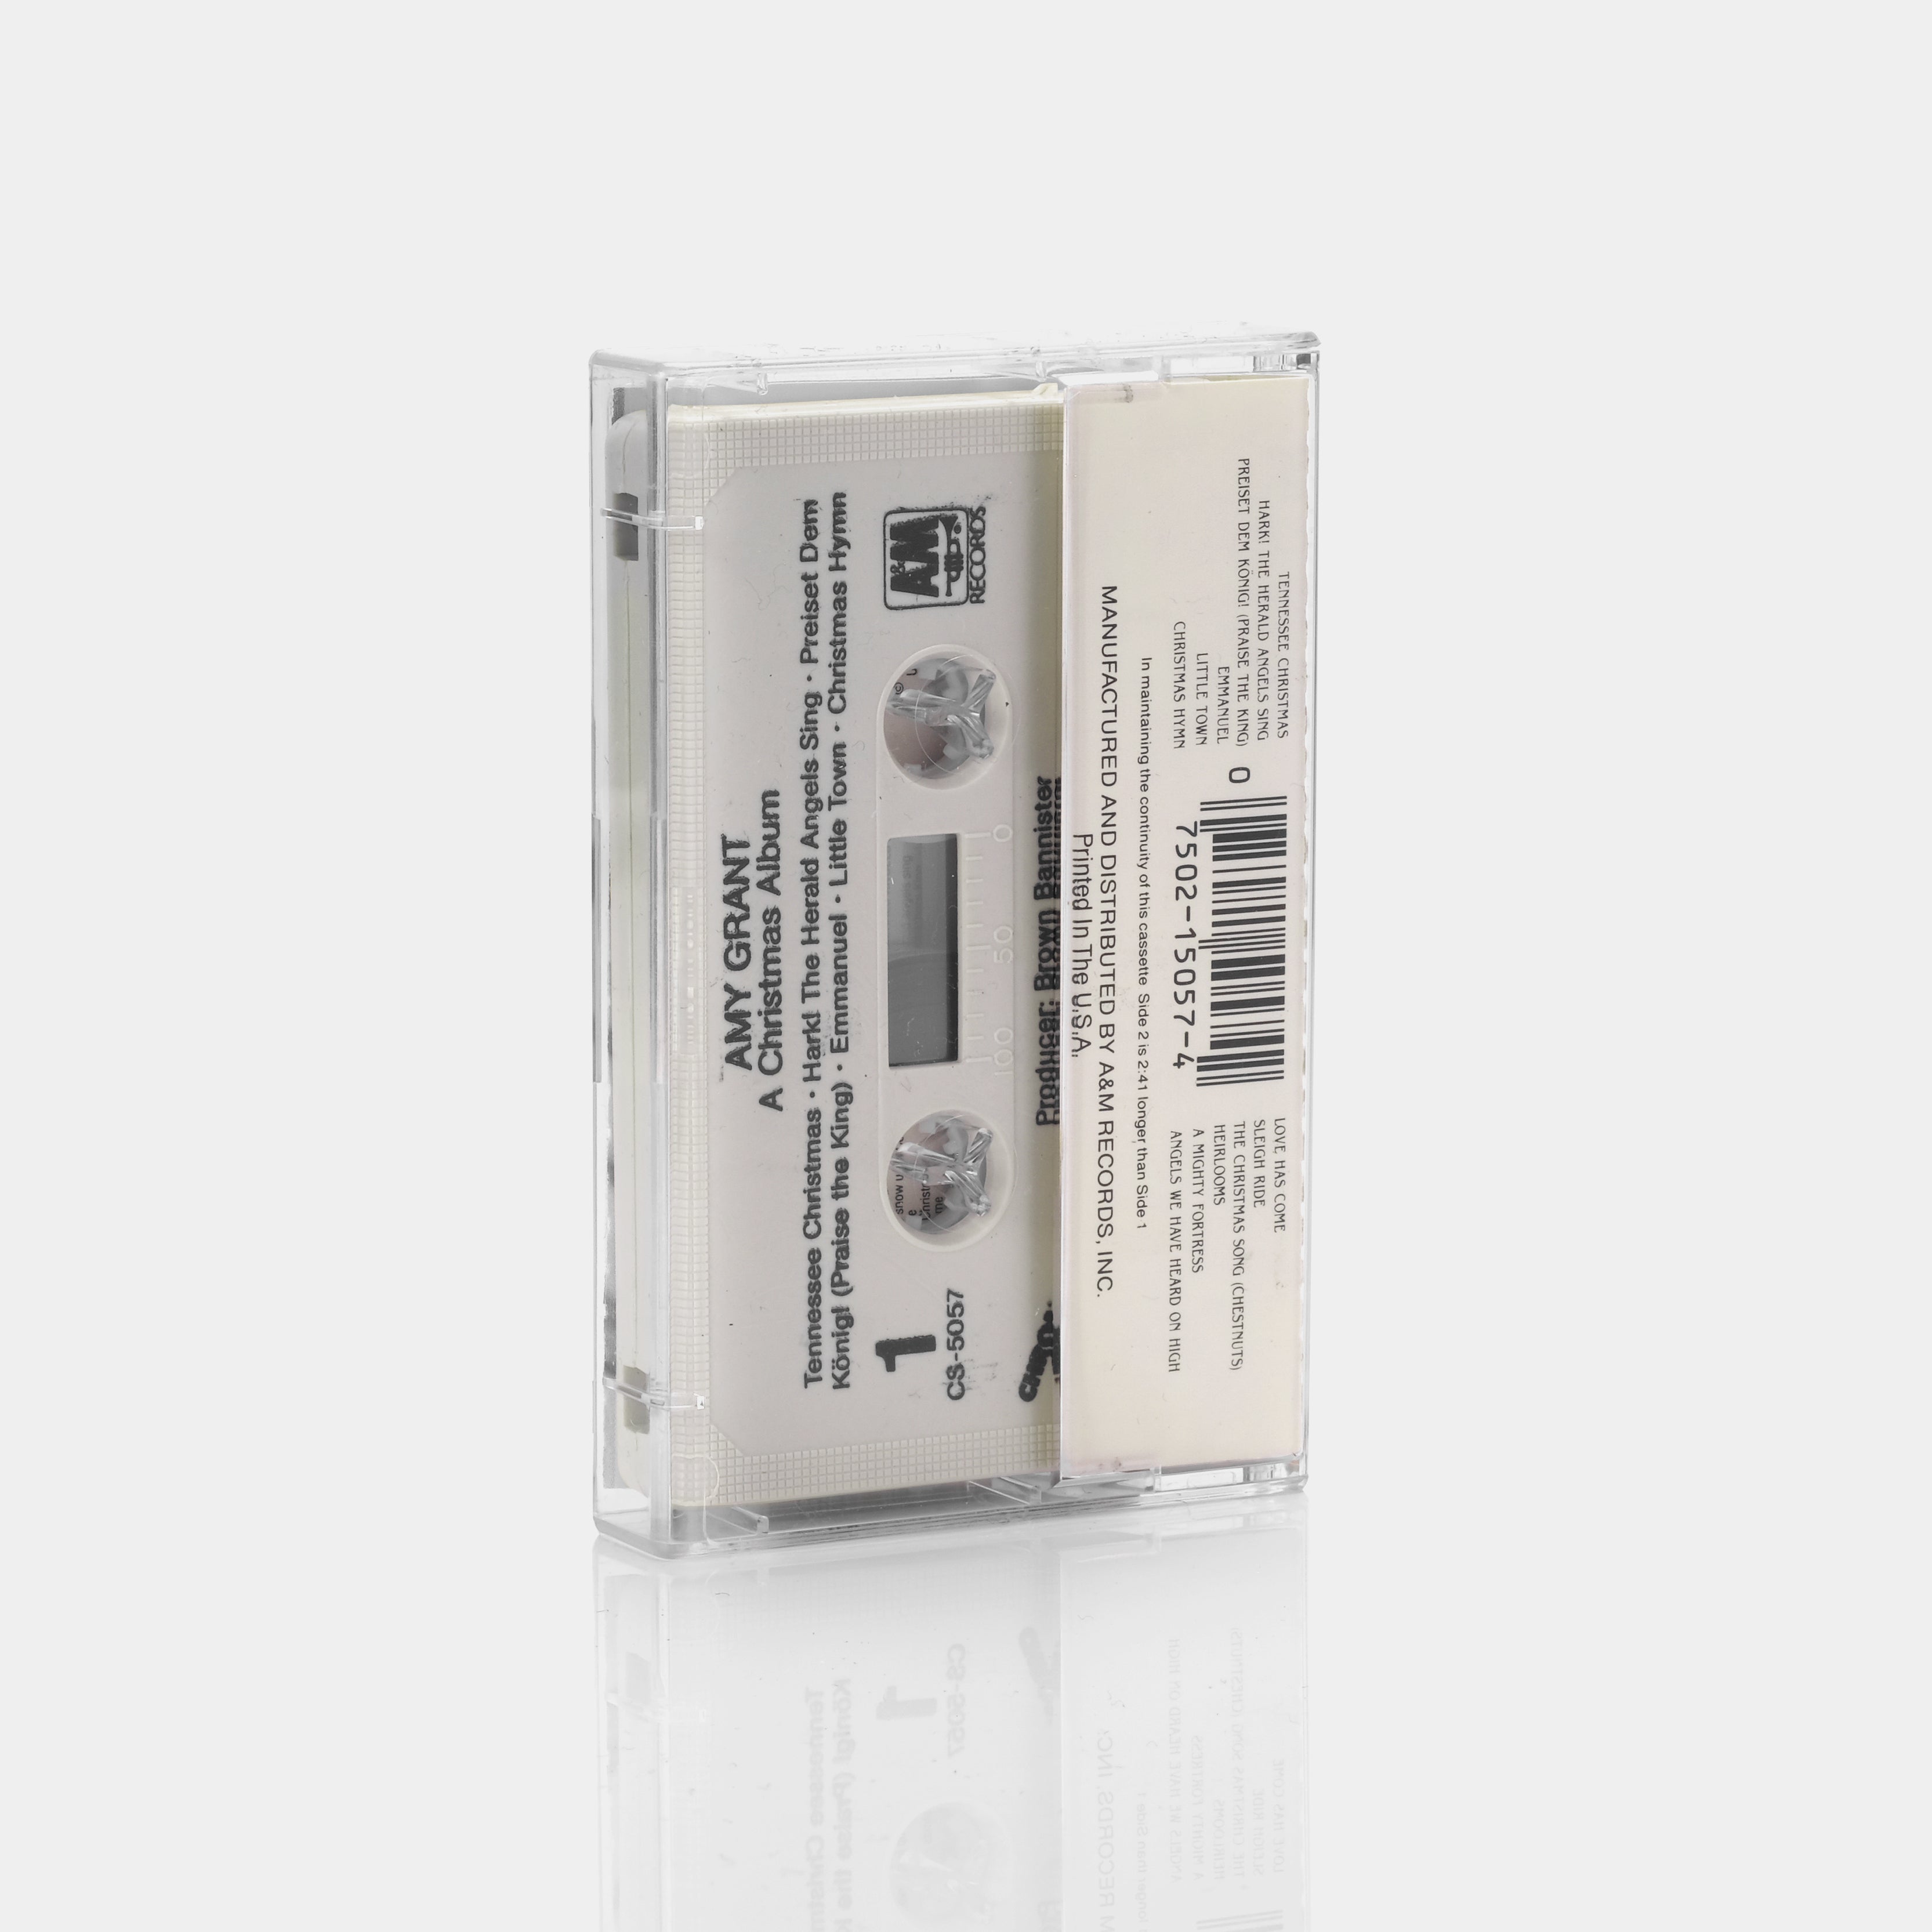 Amy Grant - A Christmas Album Cassette Tape